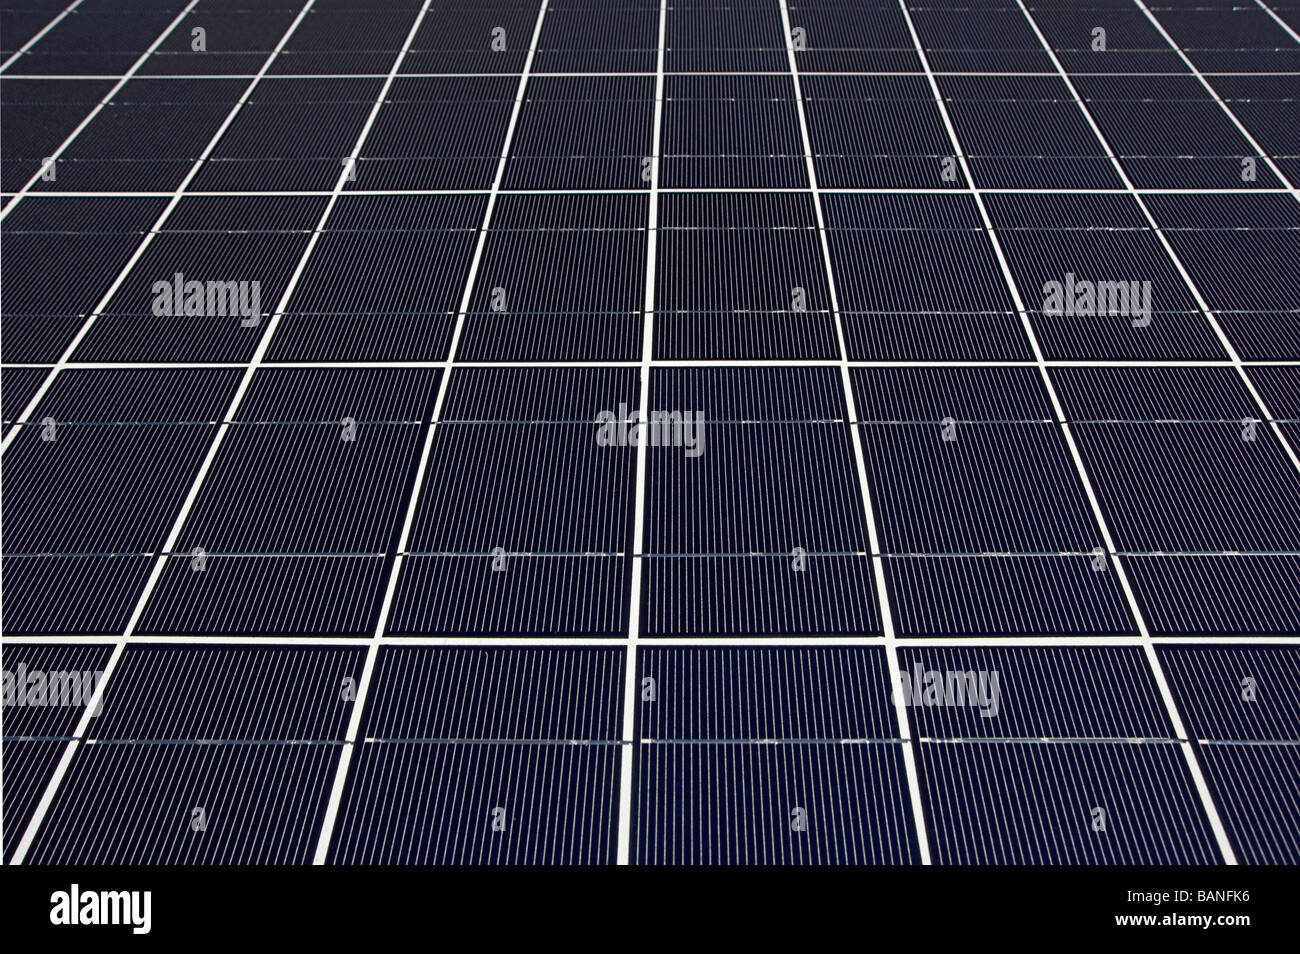 Photovoltaic solar panels Stock Photo